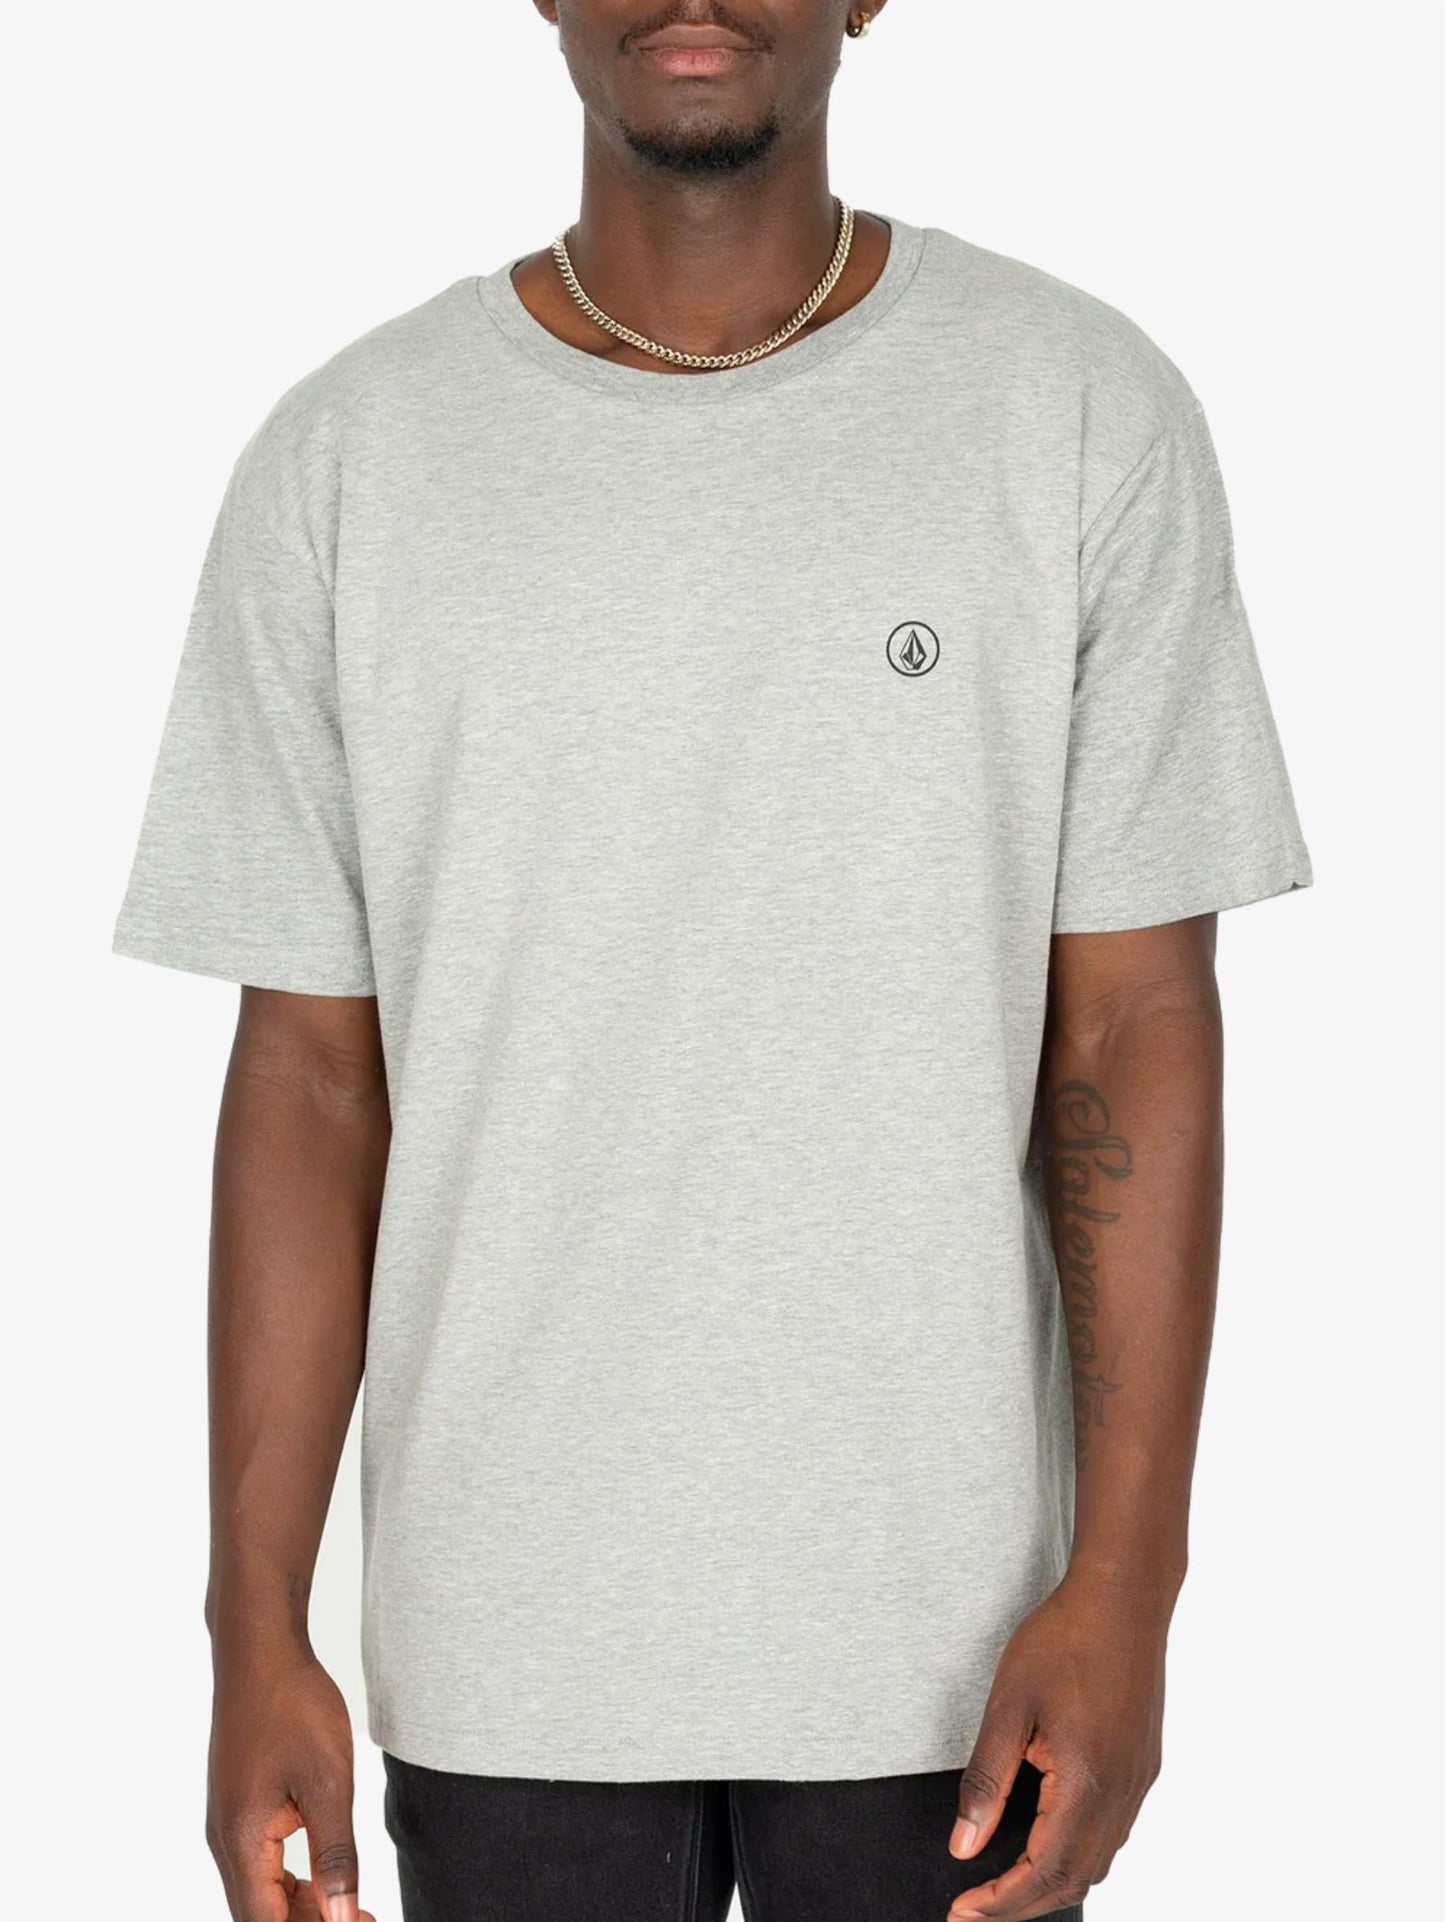 Circle Blanks Tee t-shirt heather grey